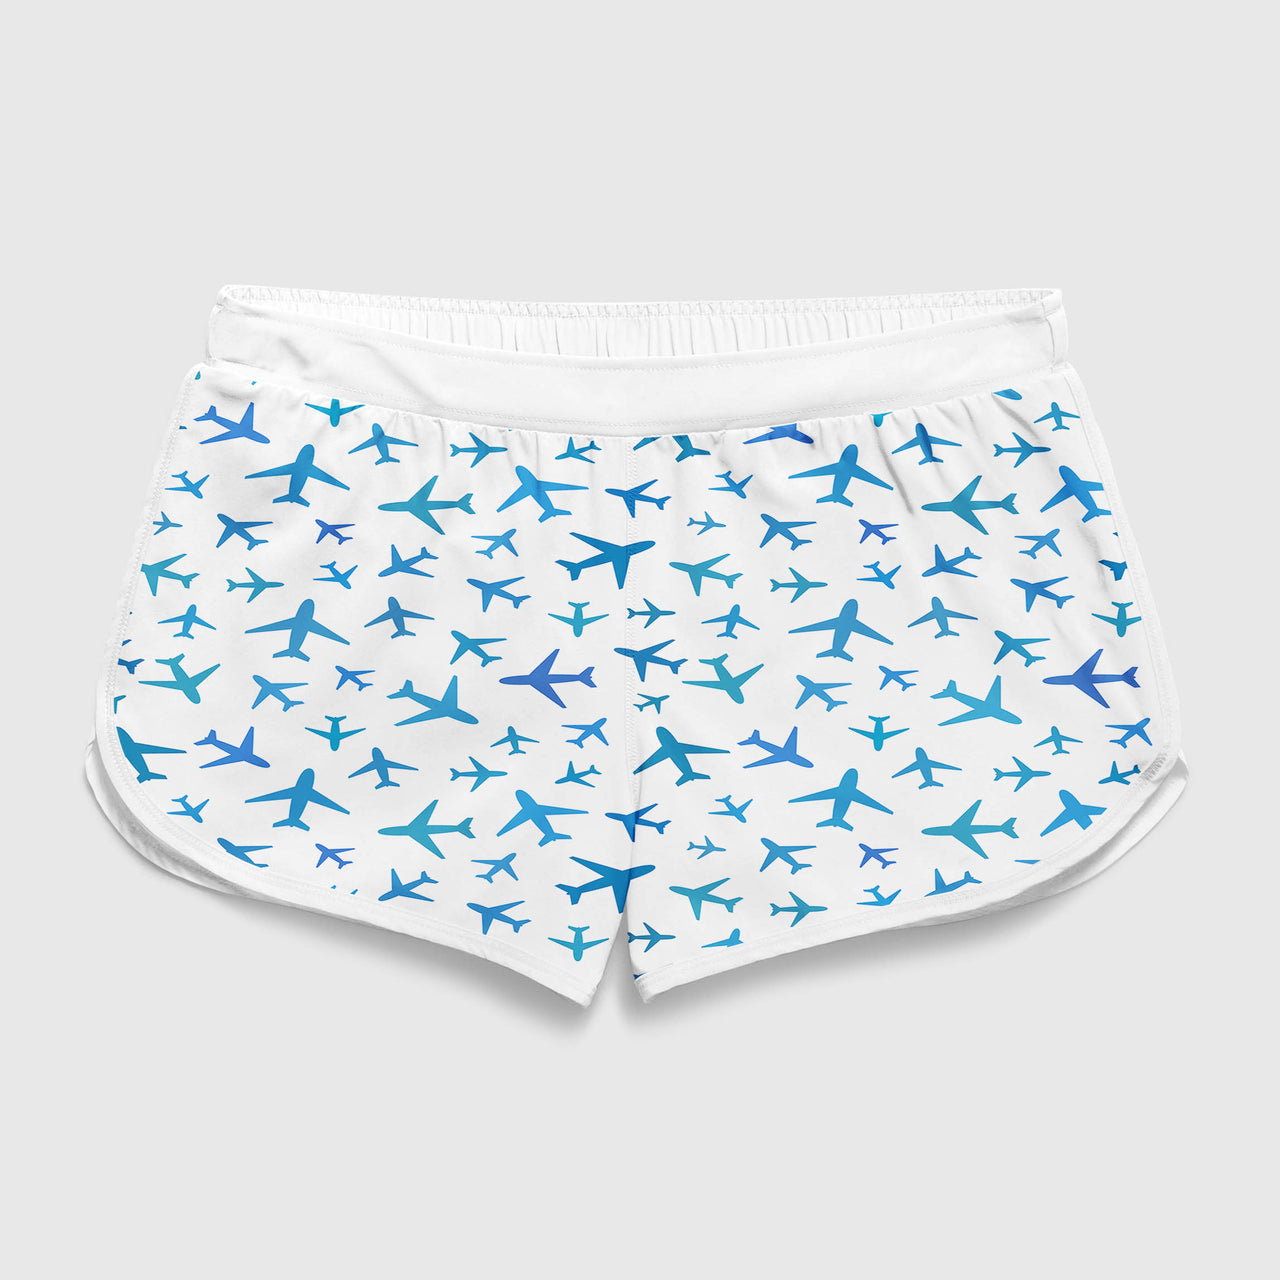 Many Airplanes White Designed Women Beach Style Shorts